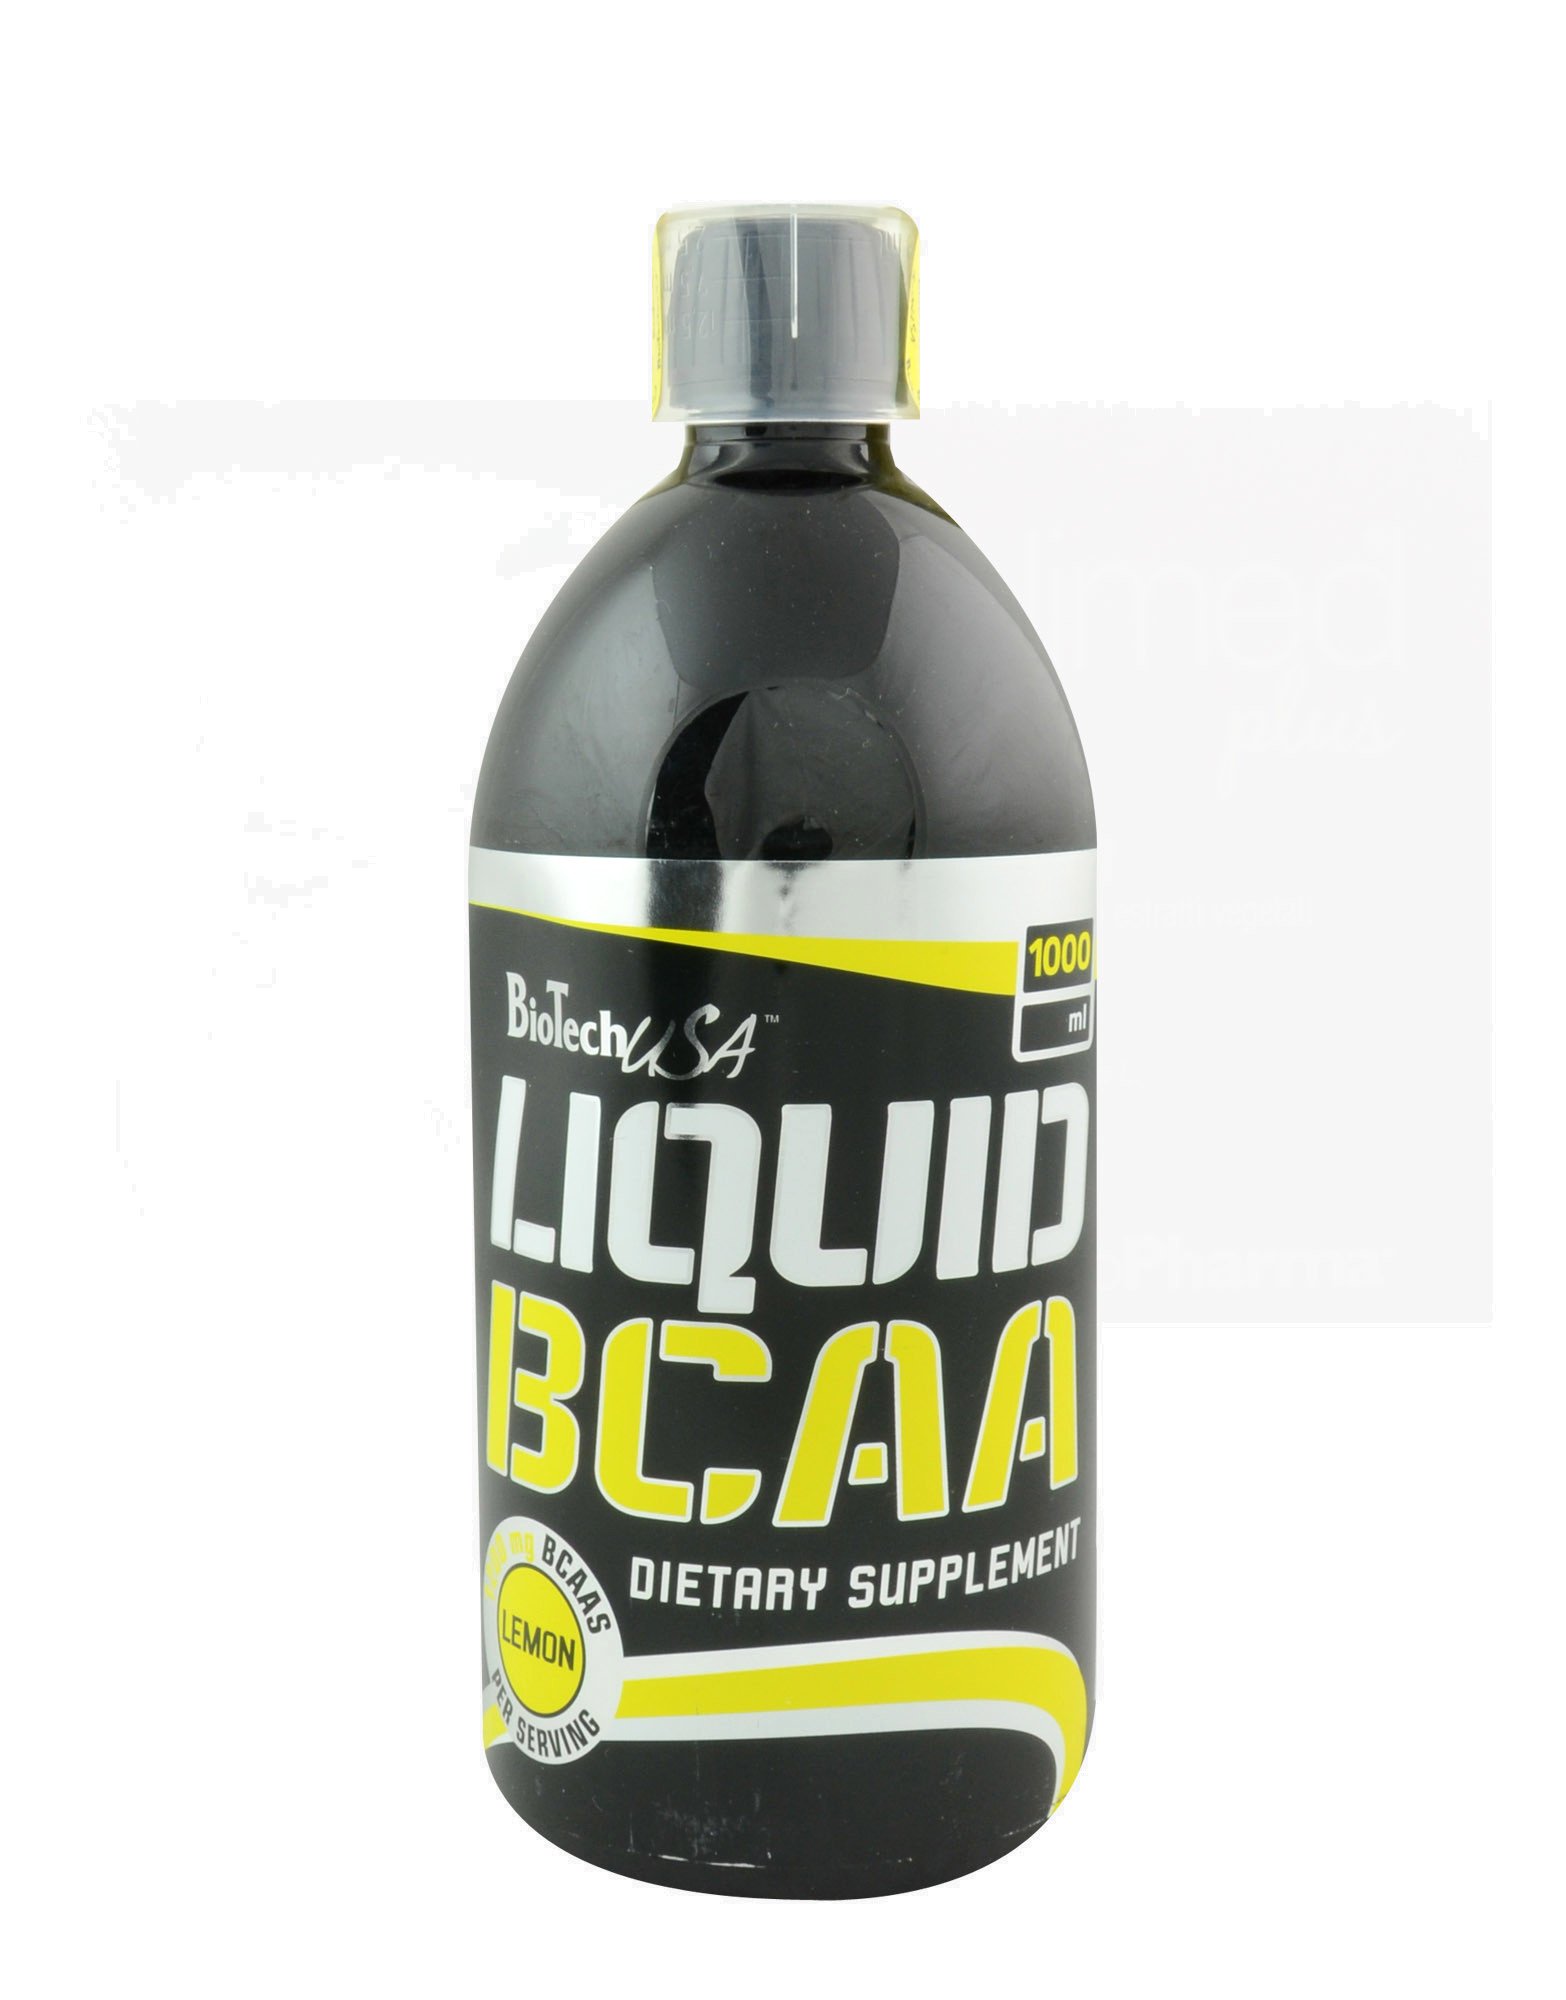 Liquid BСАА, 1000 ml, BioTech. BCAA. Weight Loss recuperación Anti-catabolic properties Lean muscle mass 